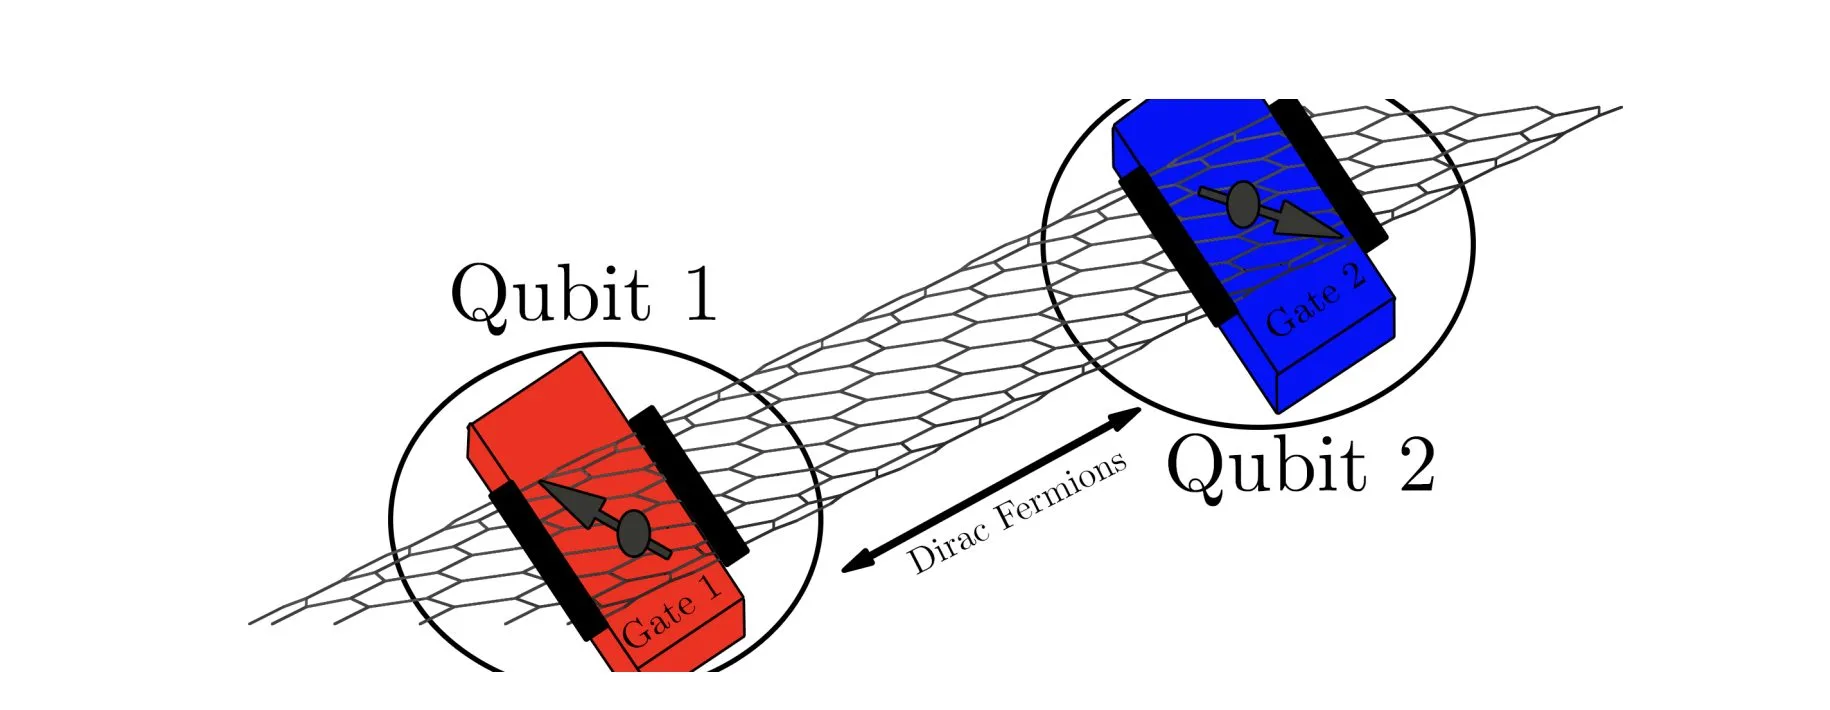 Unruh-Dewitt Detectors: Paving The Way For Advanced Quantum Computing